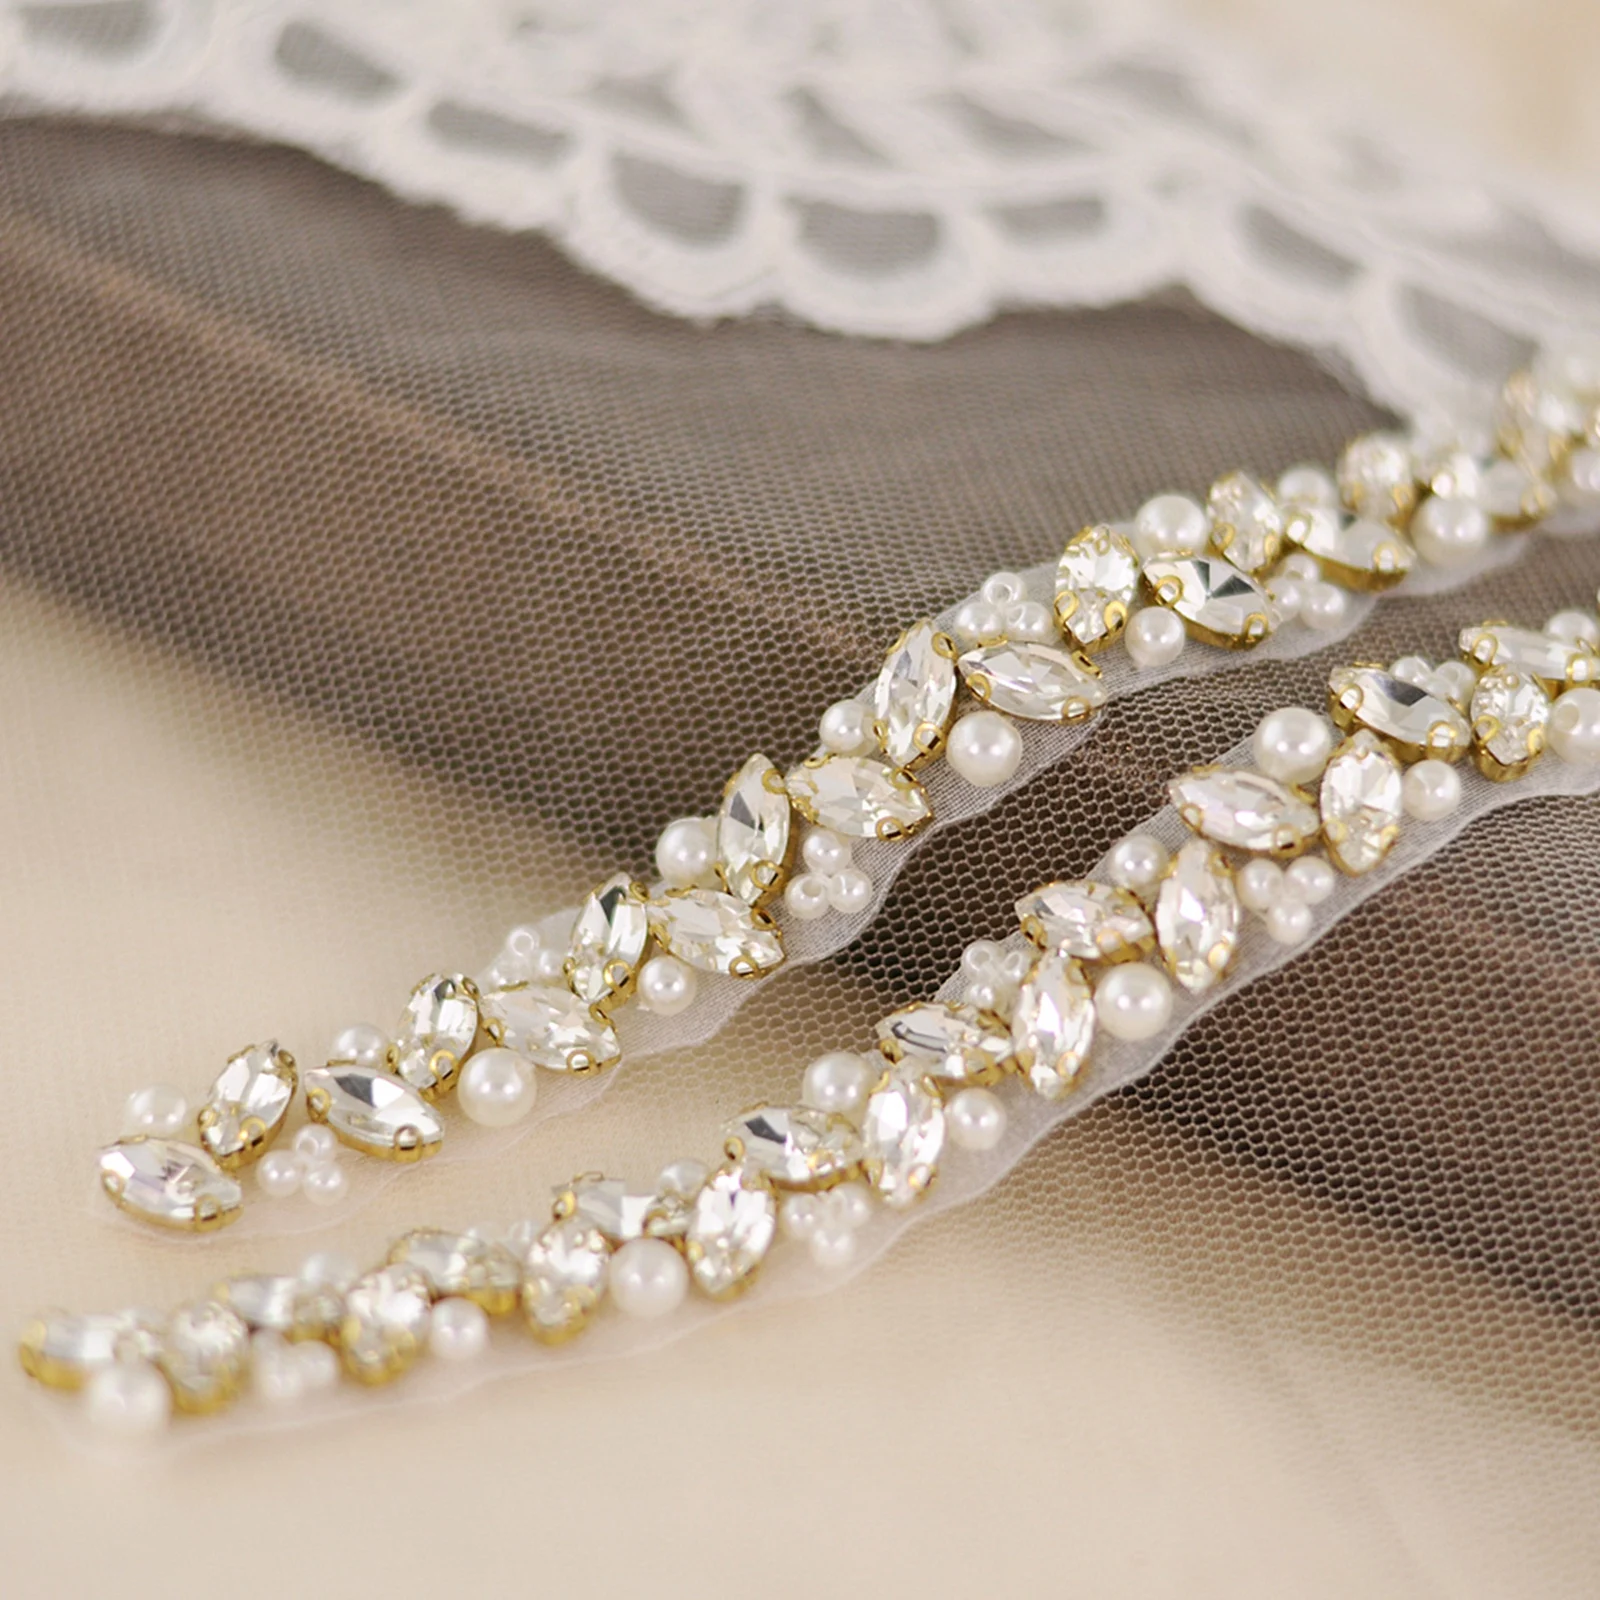 Bridal Wedding Dress Sash Belt Applique with Crystals Rhinestones Pearls Beaded 